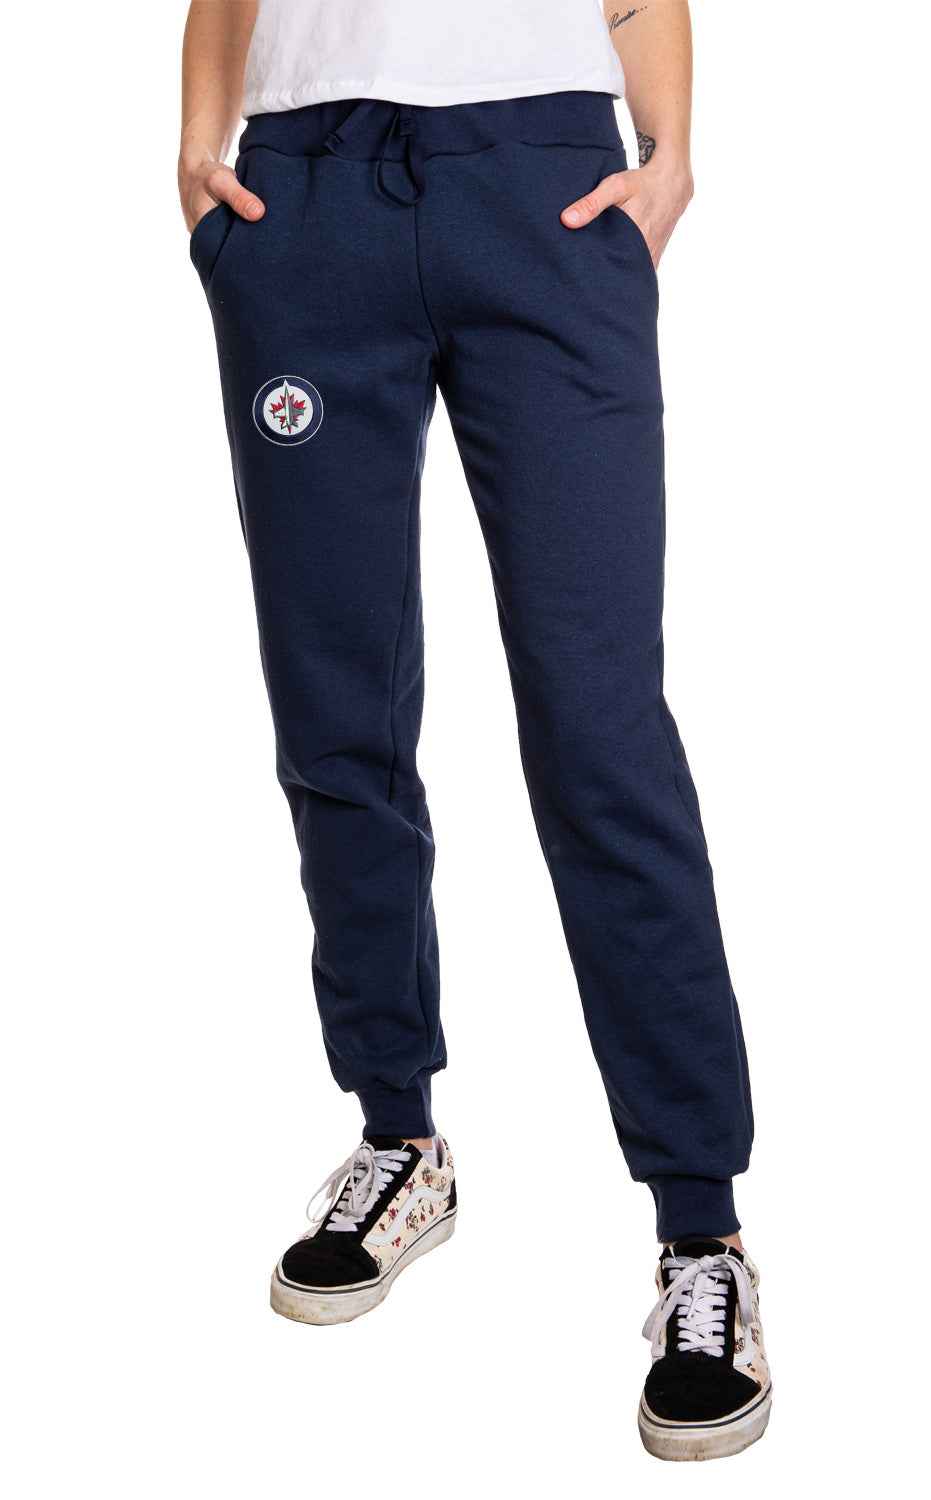 Winnipeg Jets Ladies Cuffed Jogger Style Fleece Pants